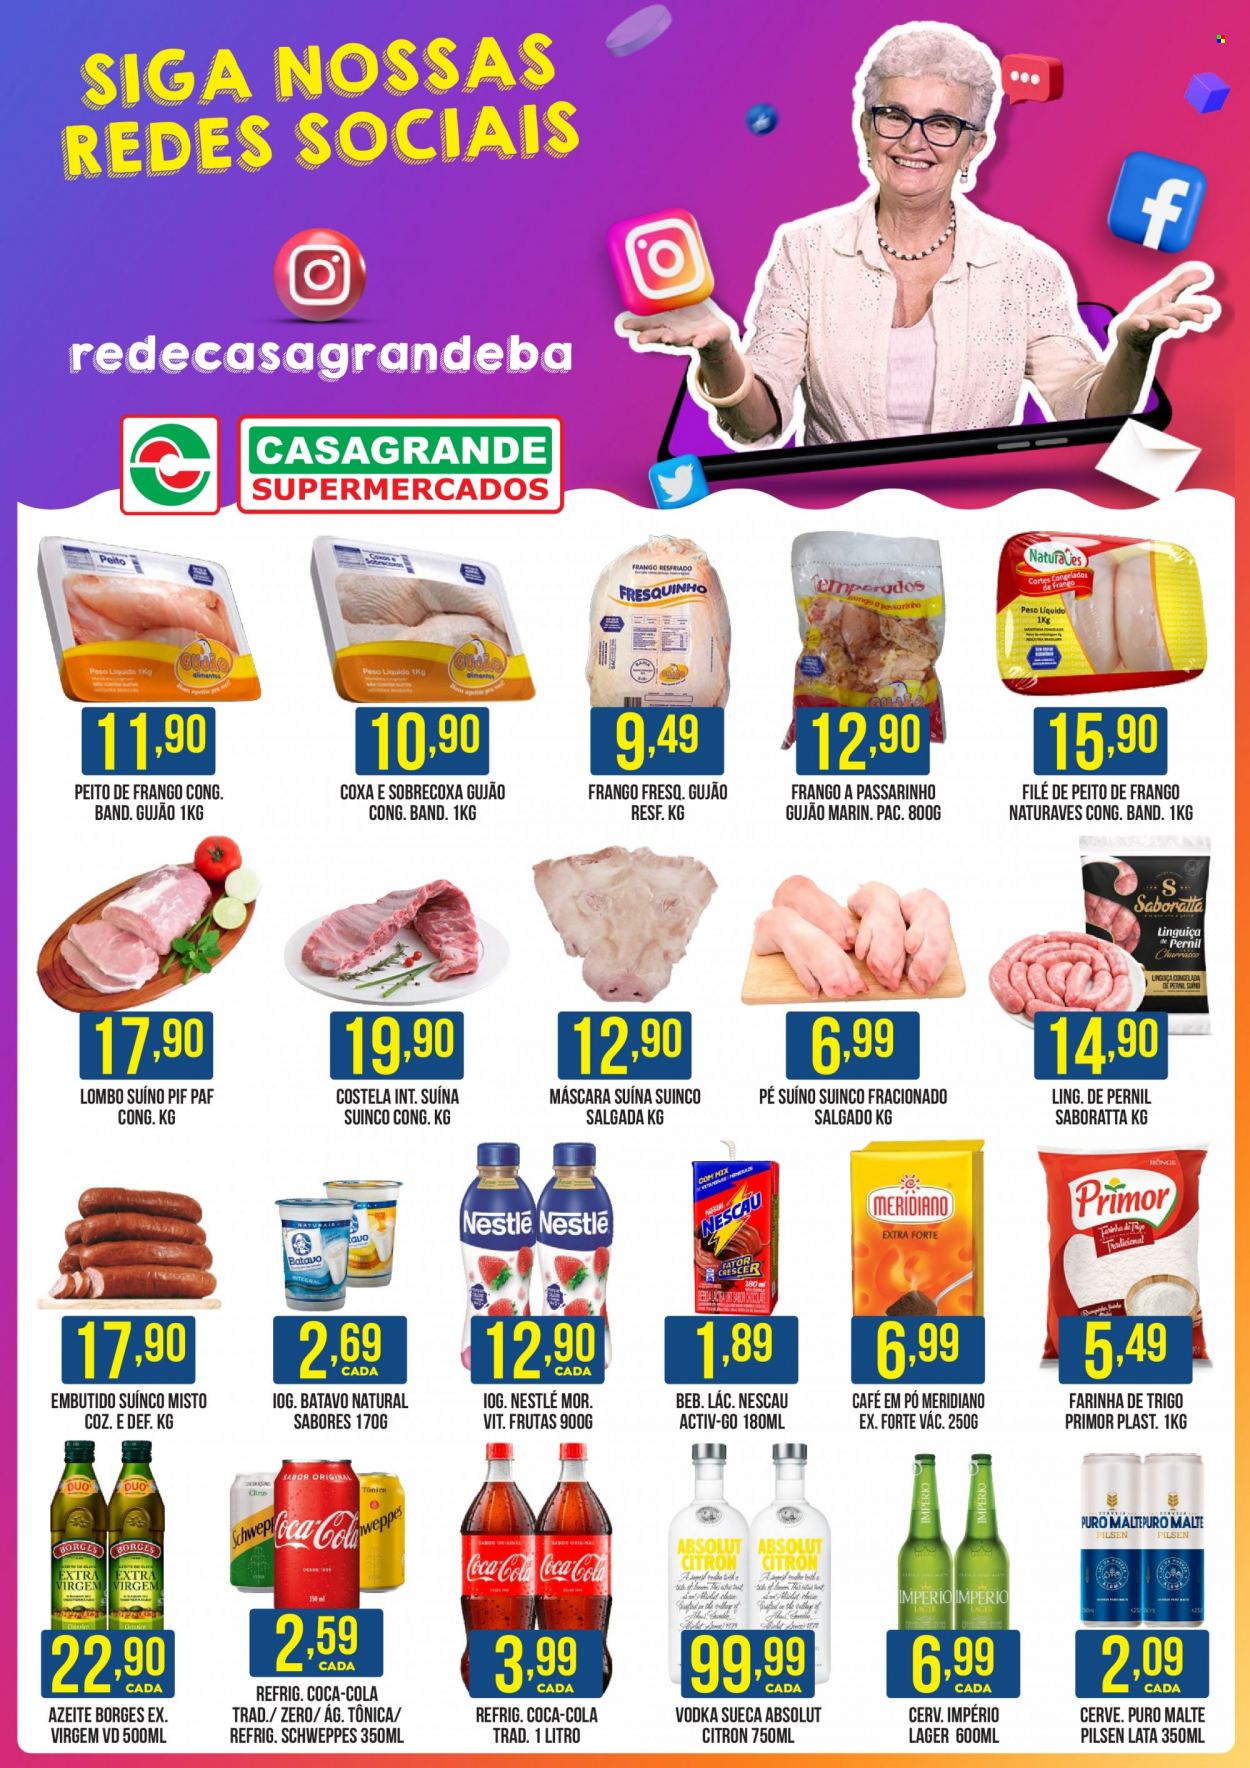 Encarte Casagrande Supermercados  - 30.01.2023 - 11.02.2023.